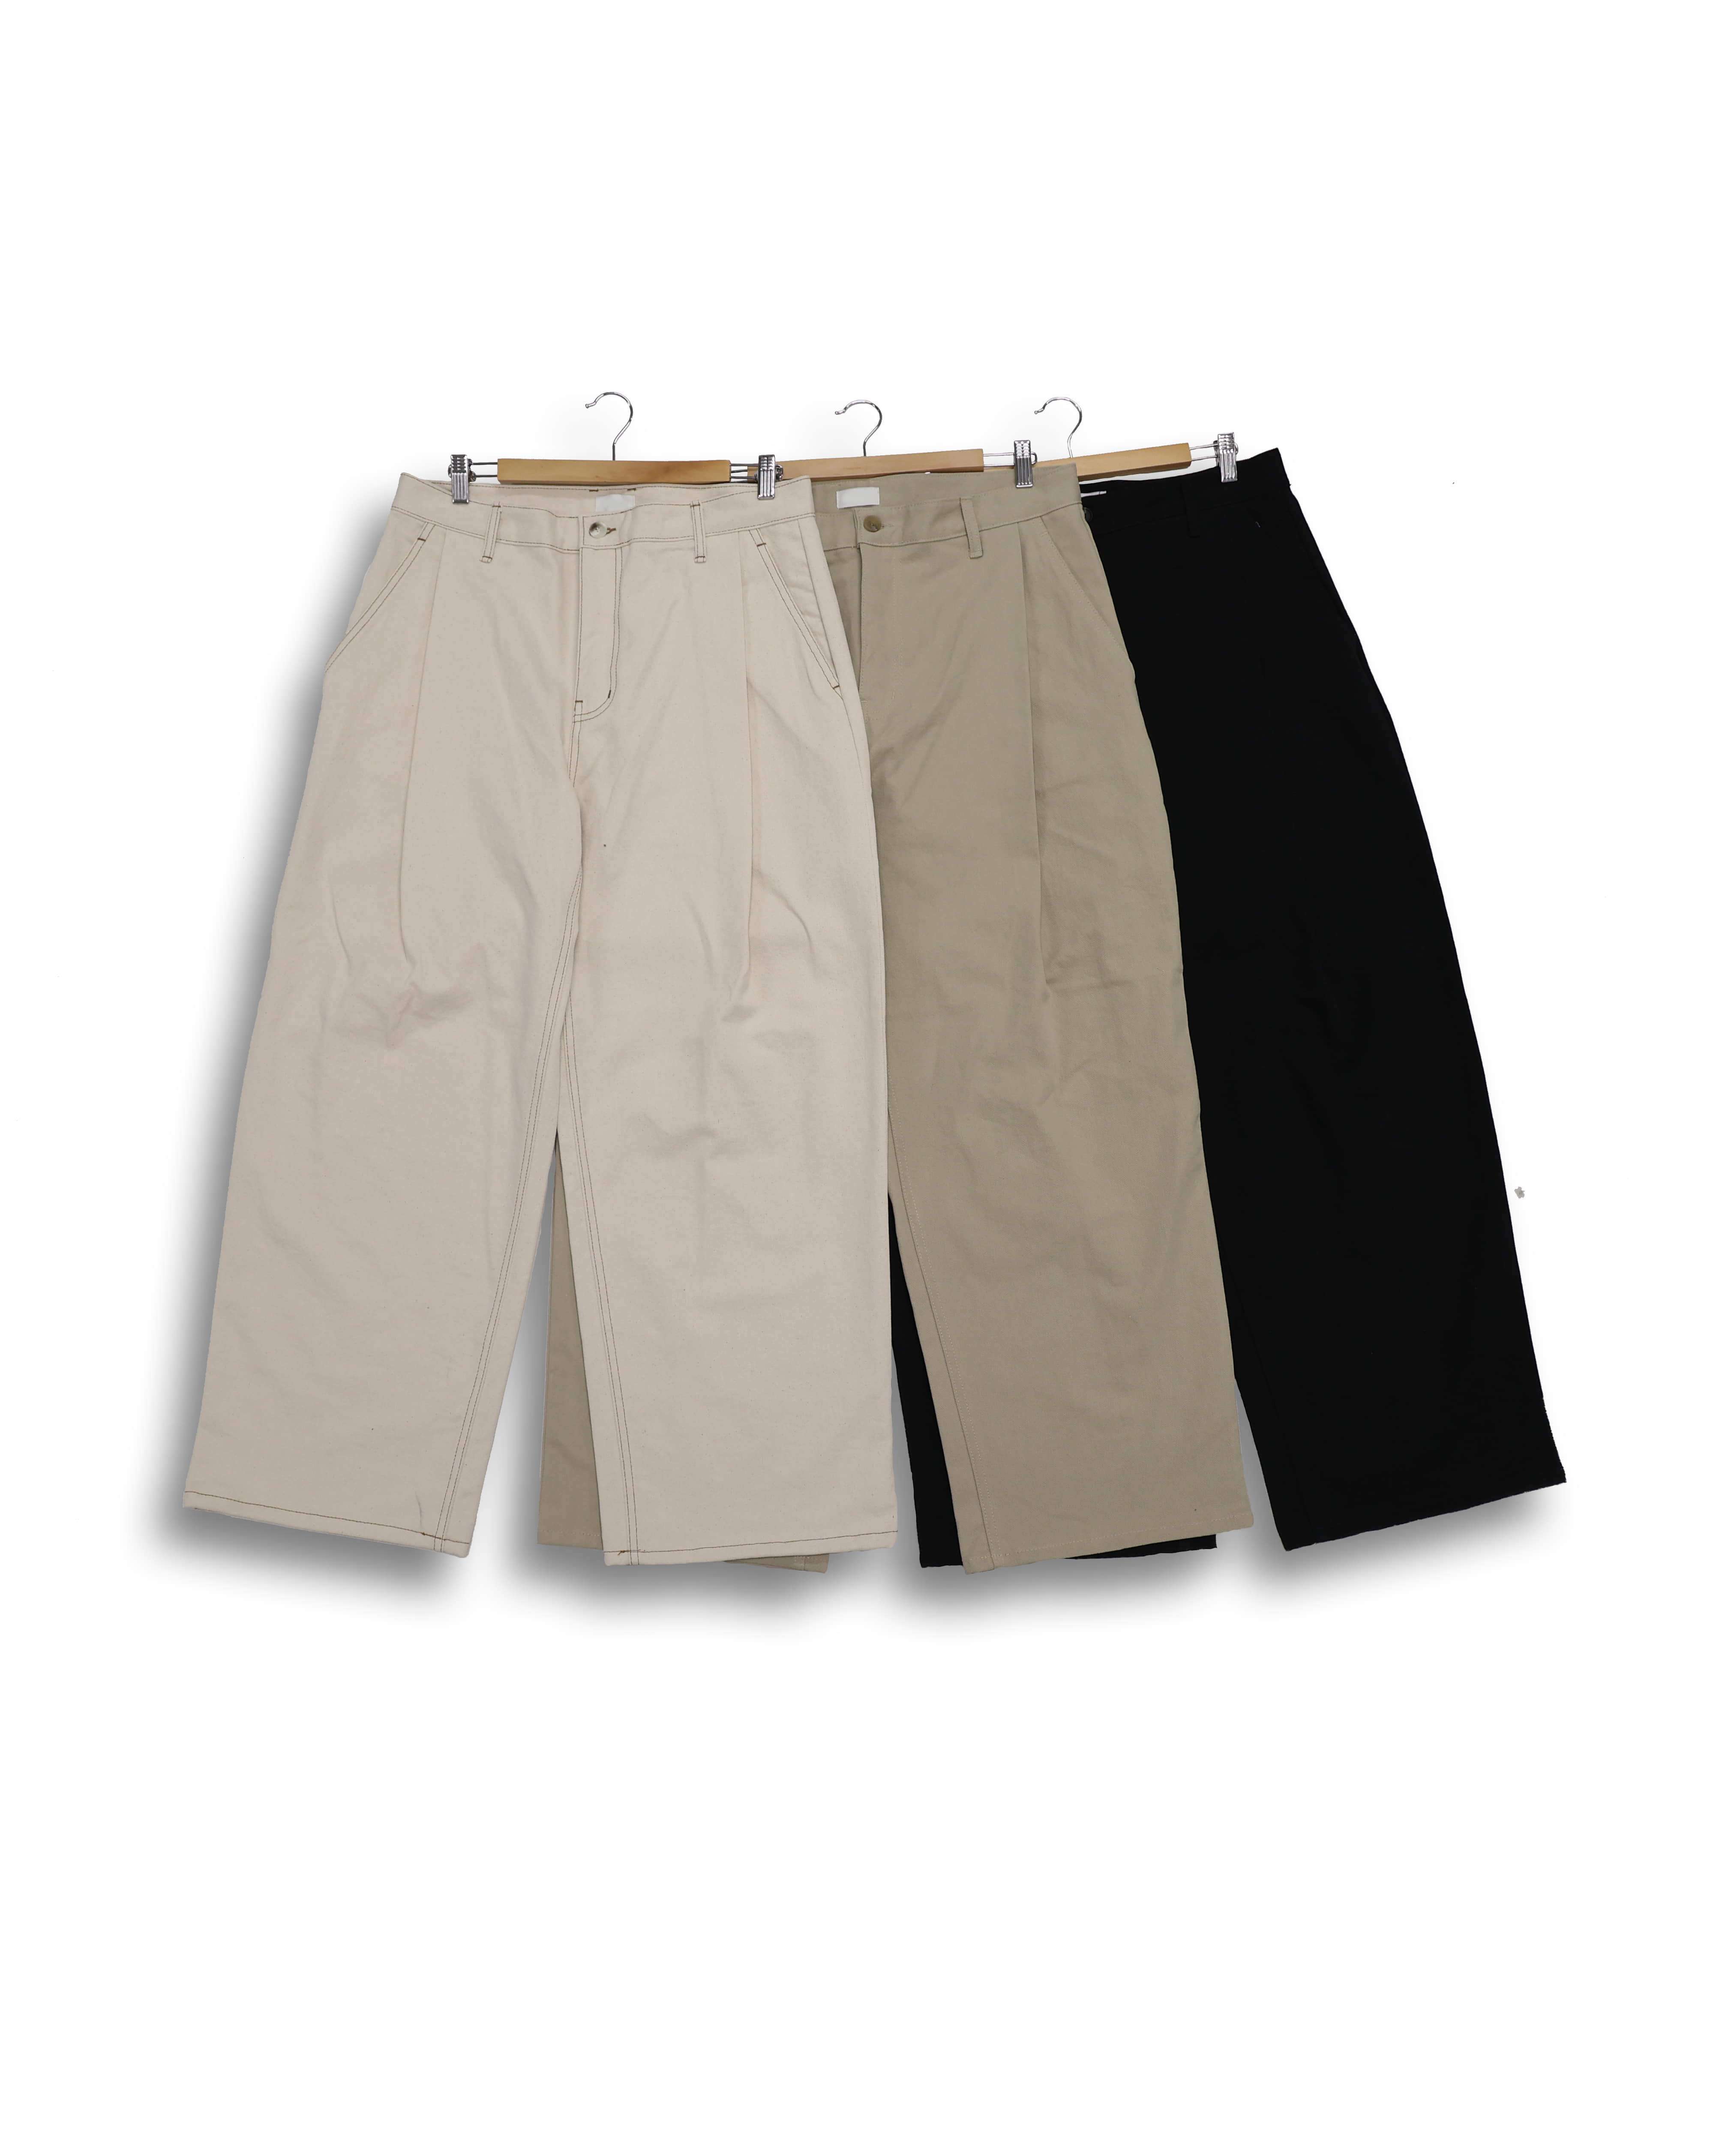 GROSS Basic Pintuck Wide Chino Pants (Black/Beige/Ivory)